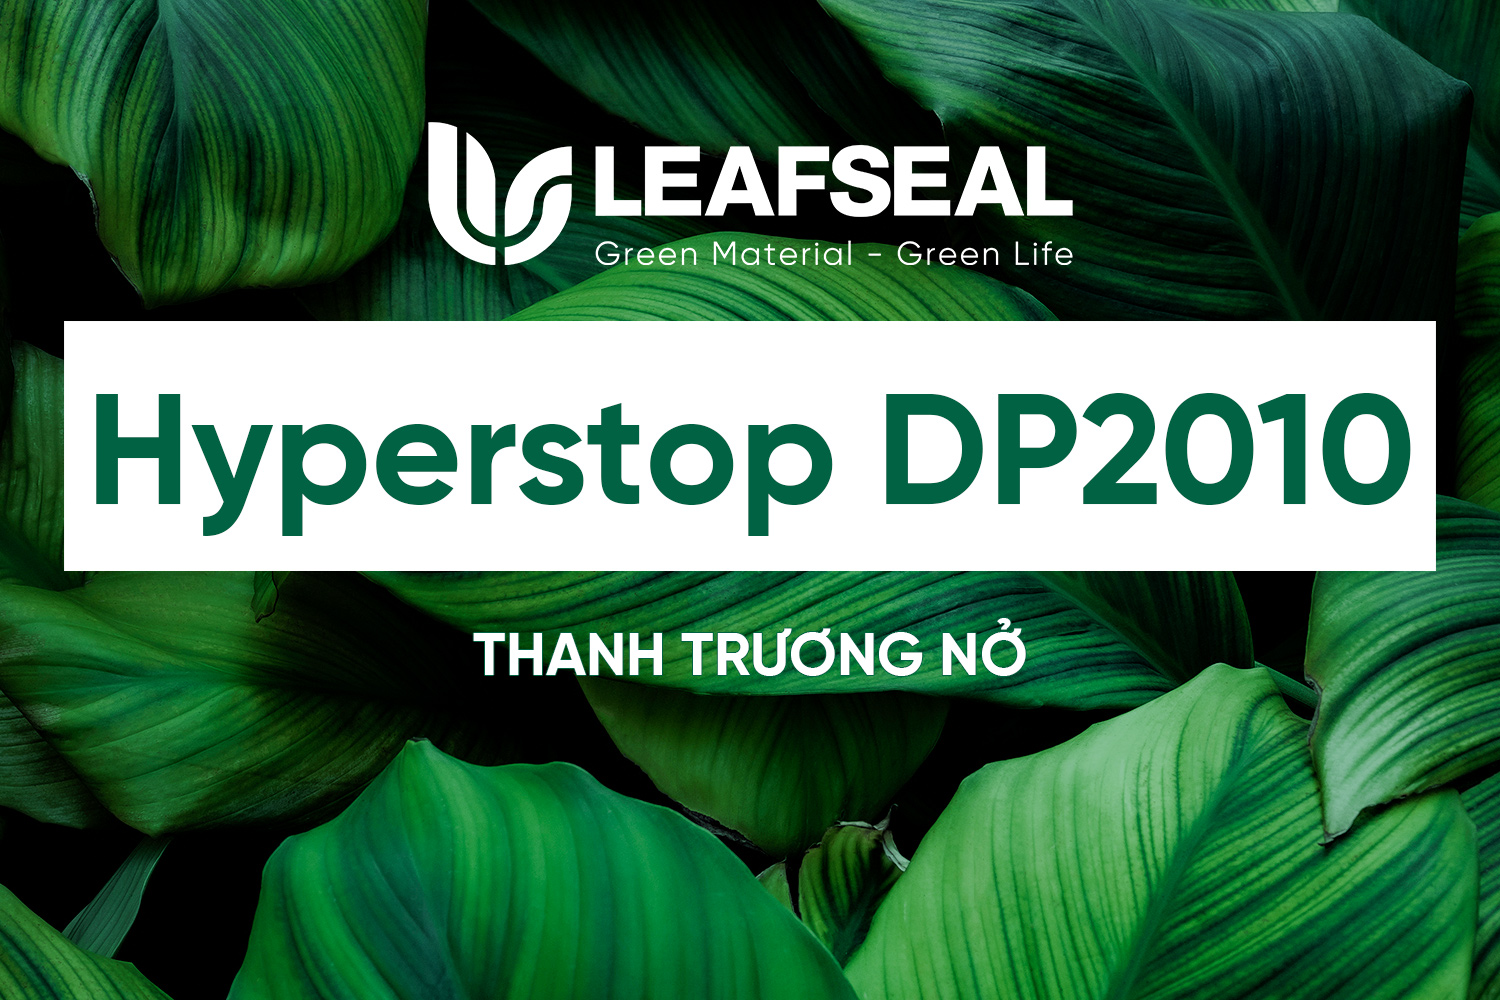 LeafSeal Hyperstop DP2010 (New)